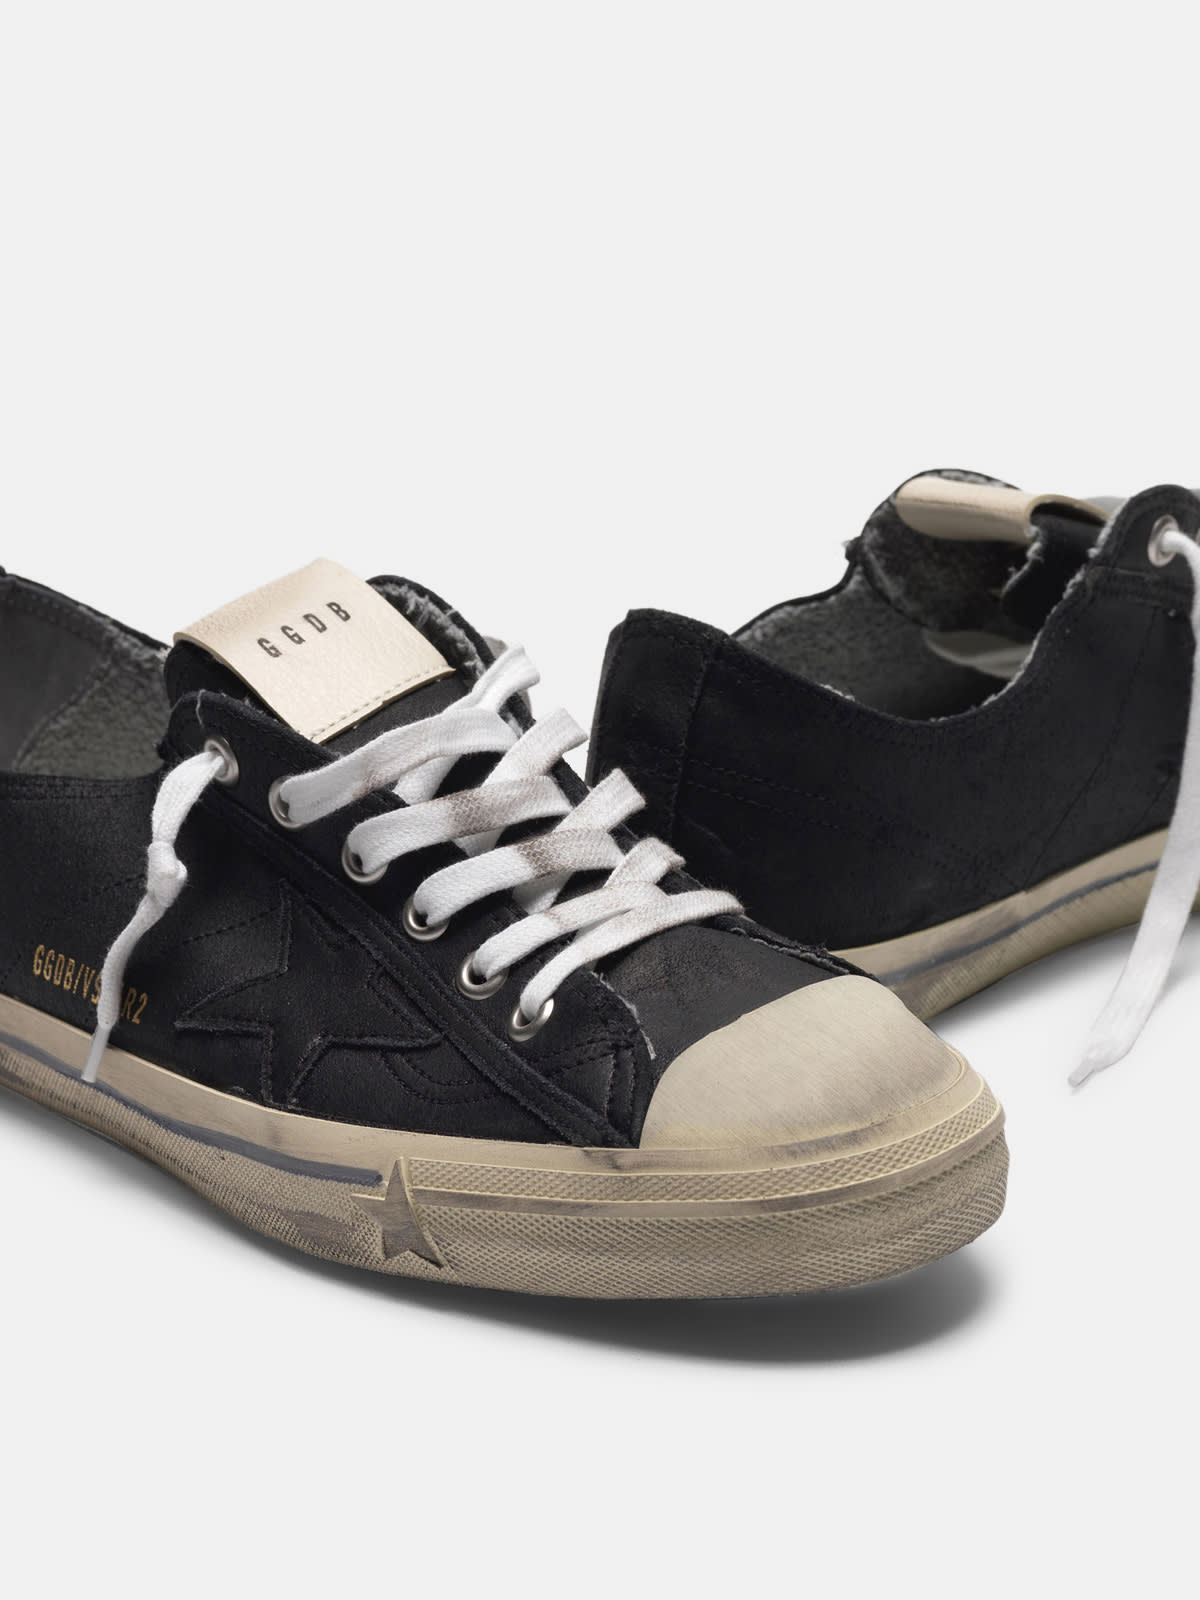 V-STAR sneakers in vintage-effect leather | Golden Goose